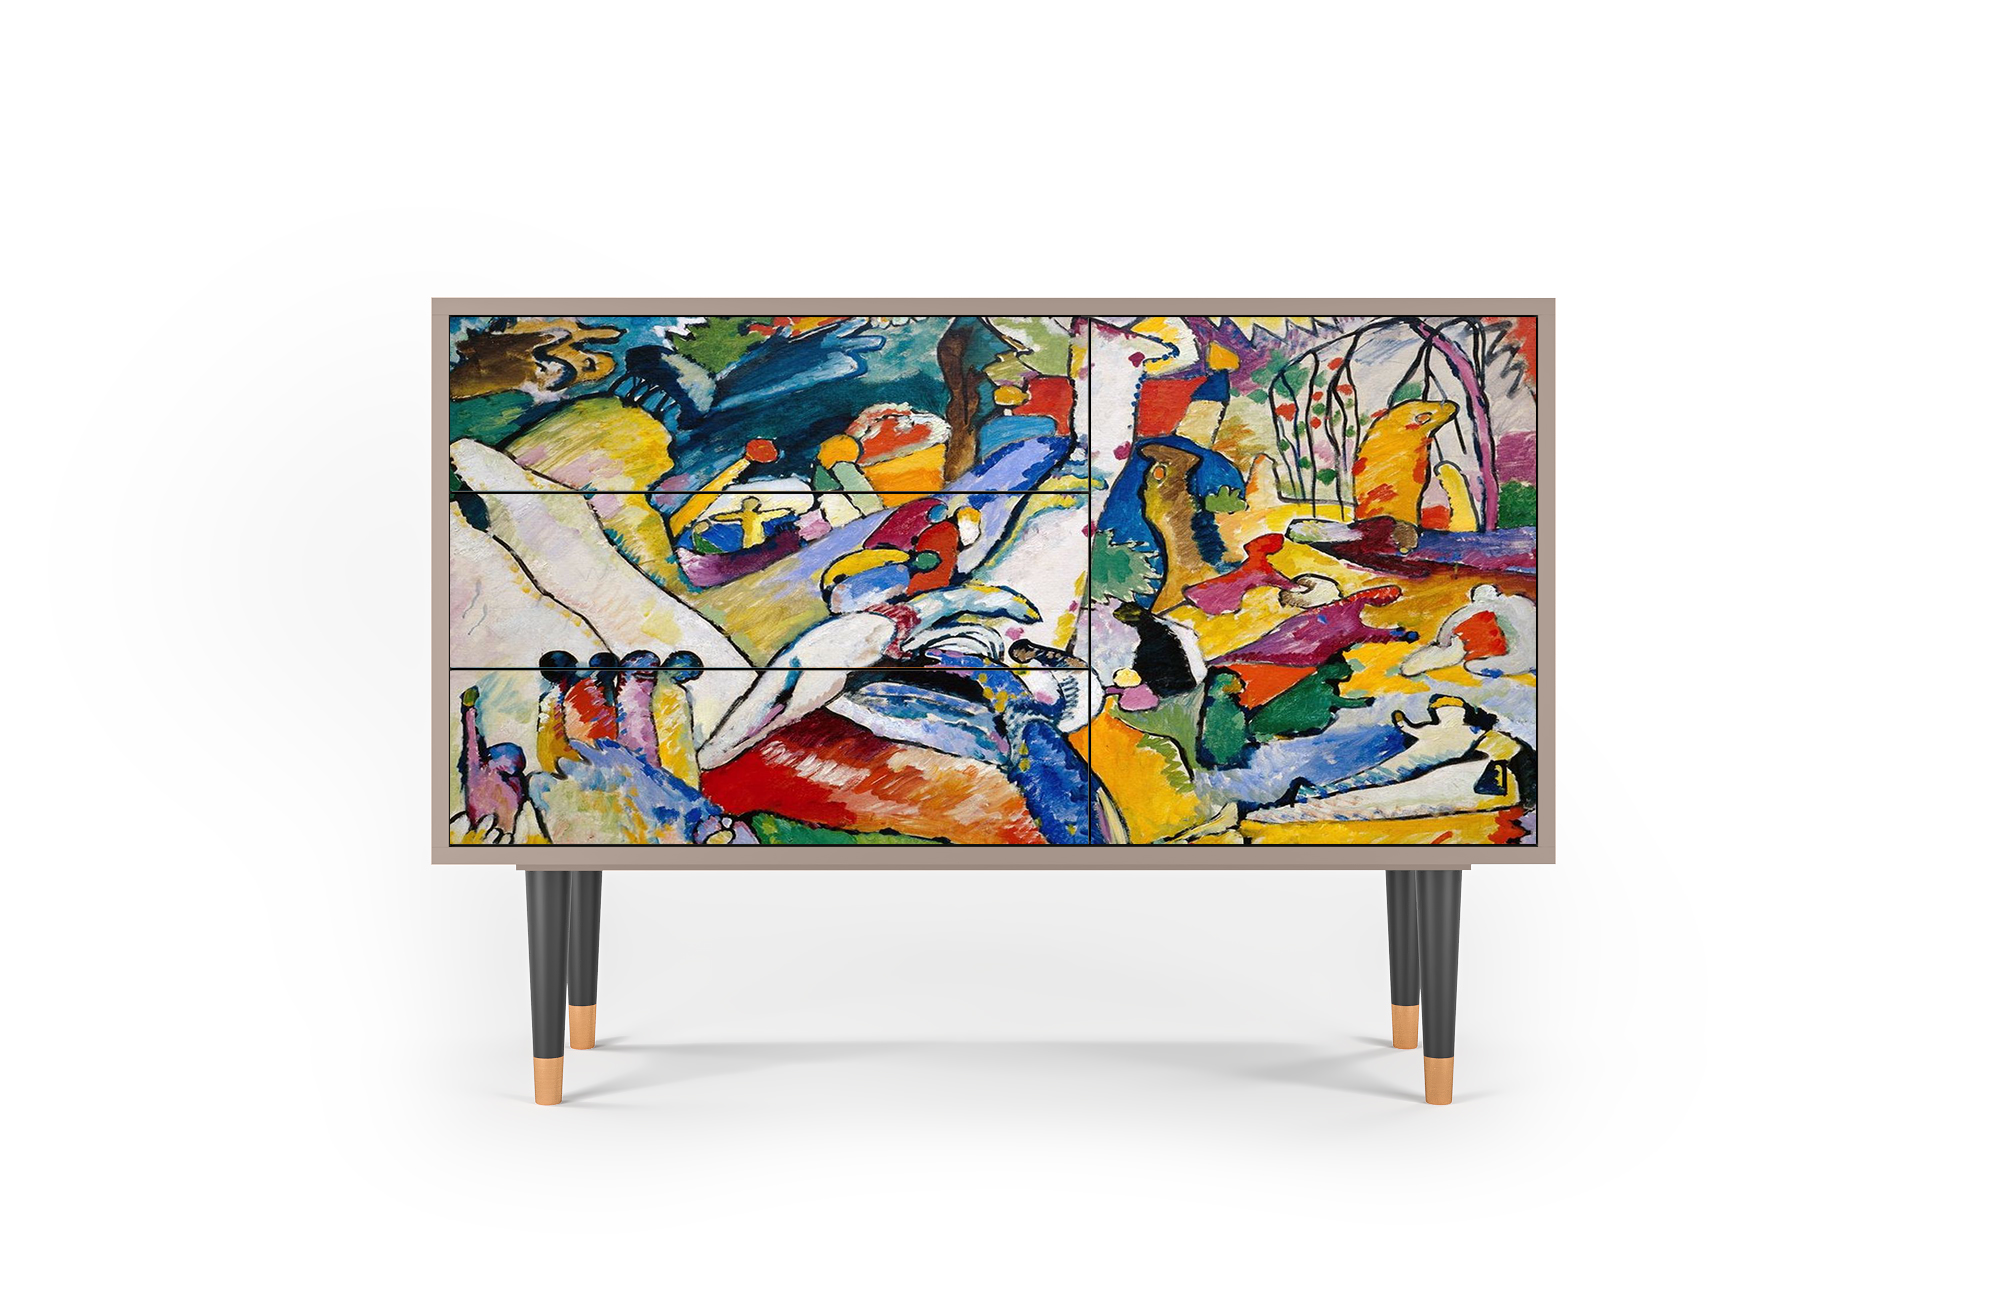 Комод - STORYZ - S3 Improvisation 26 by Wassily Kandinsky , 115 x 84 x 41 см, Бежевый - фотография № 2